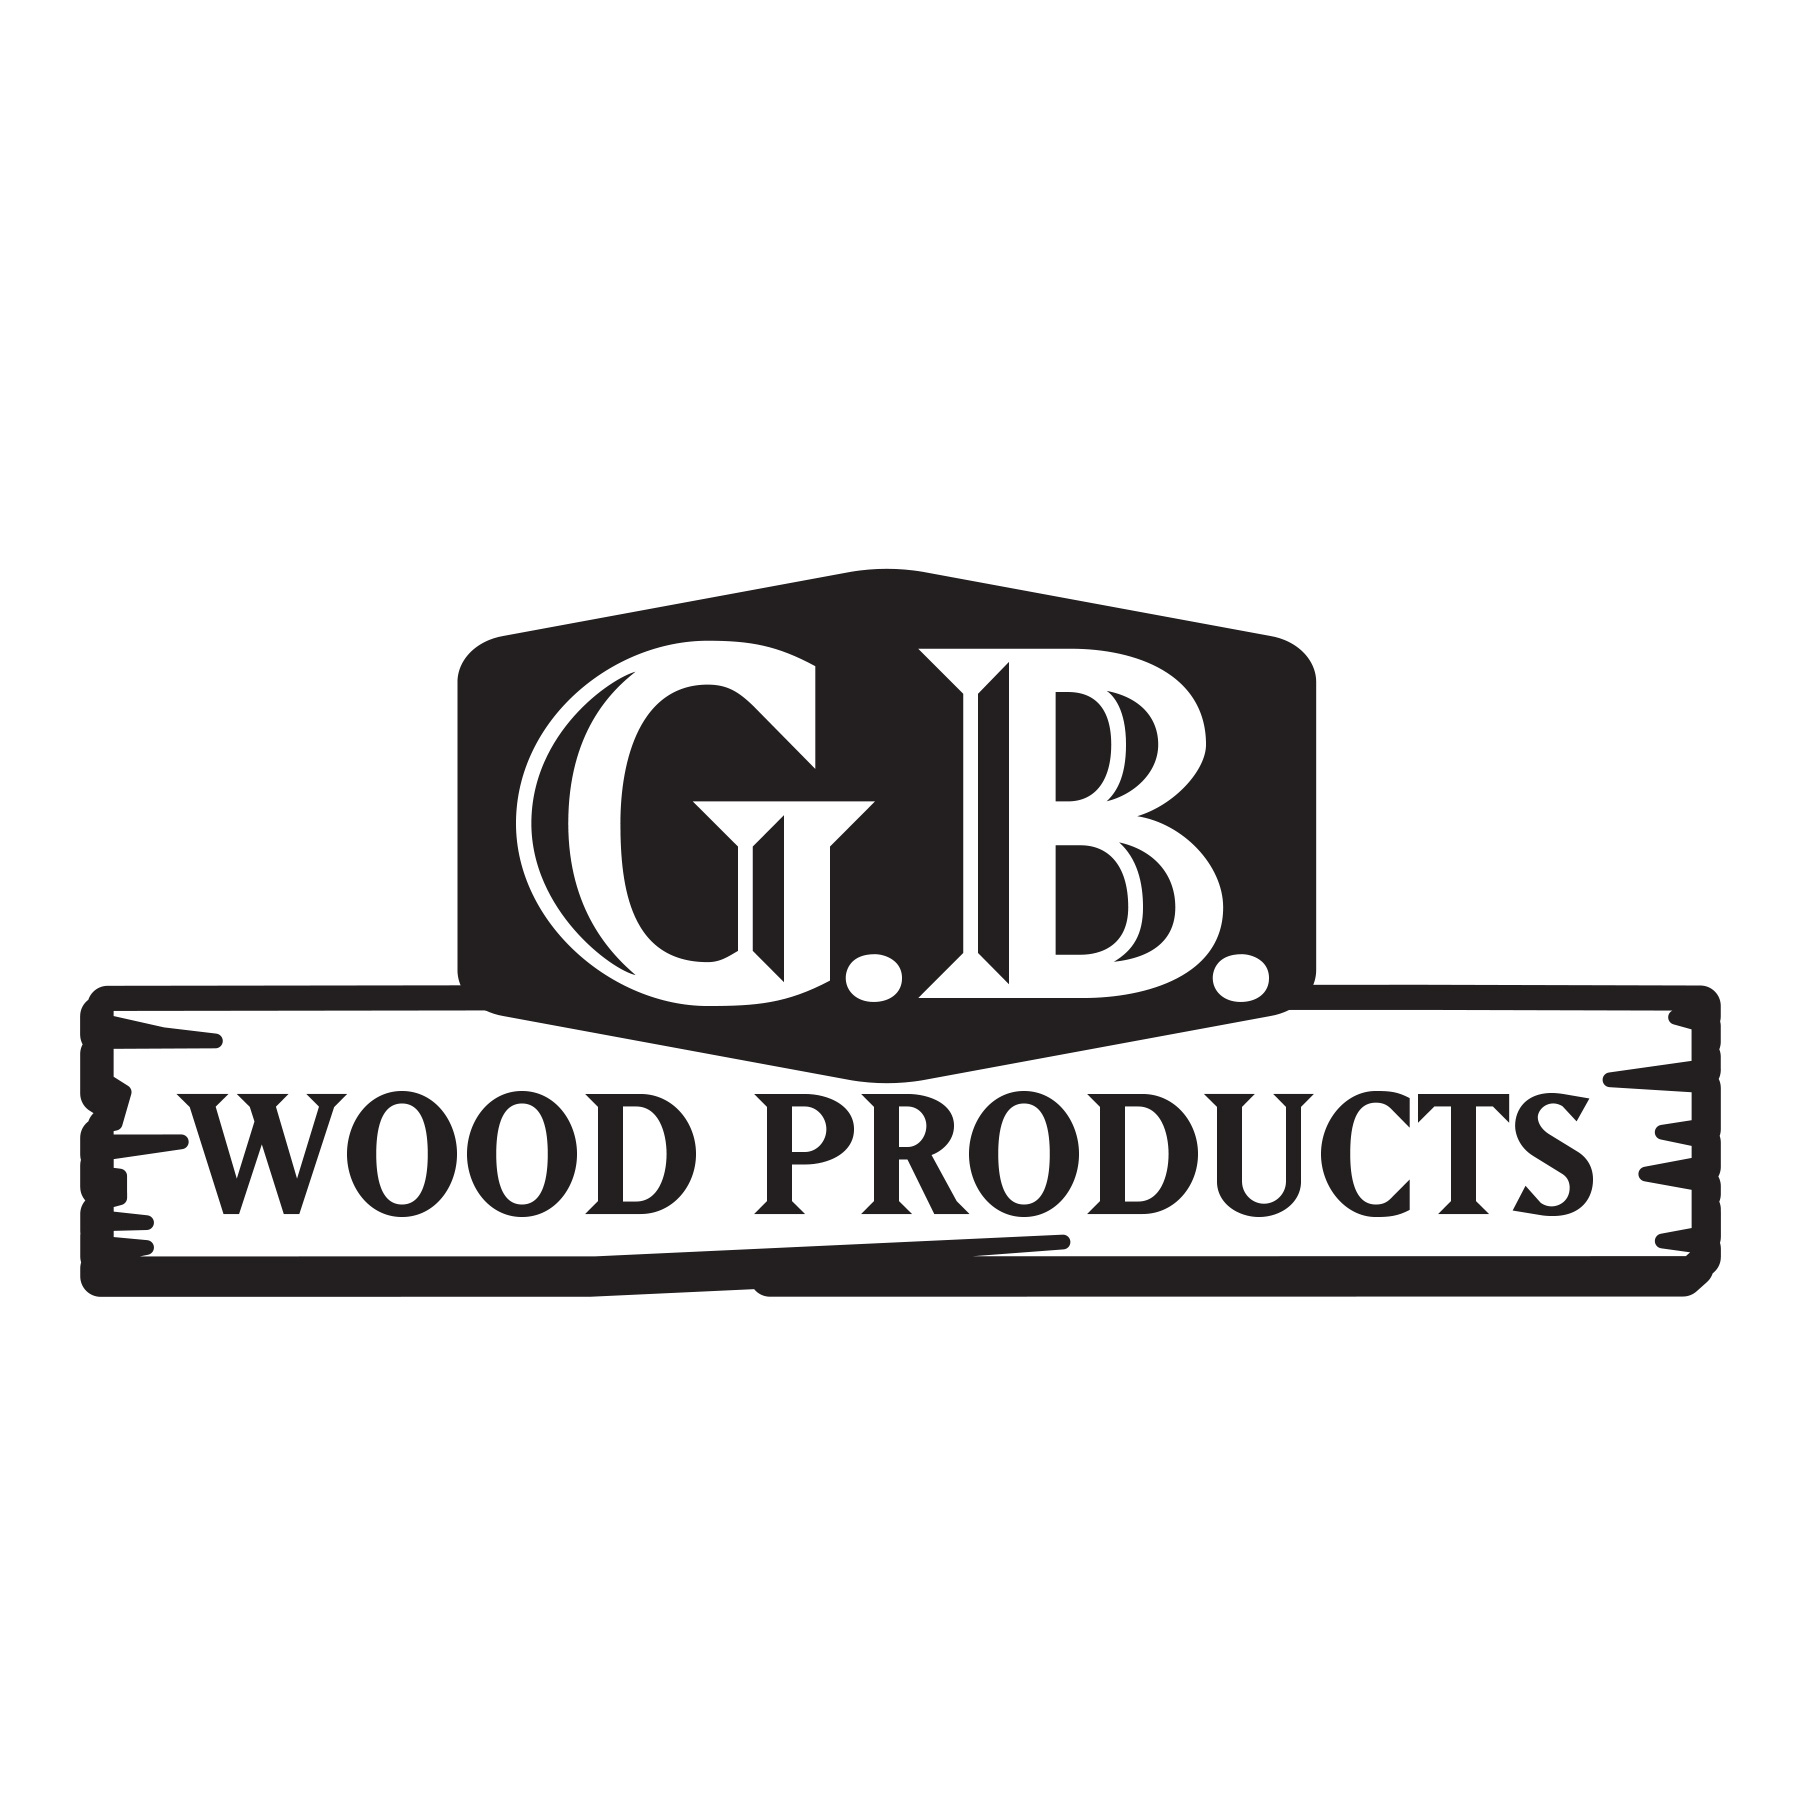 G.B. Wood Products Logo